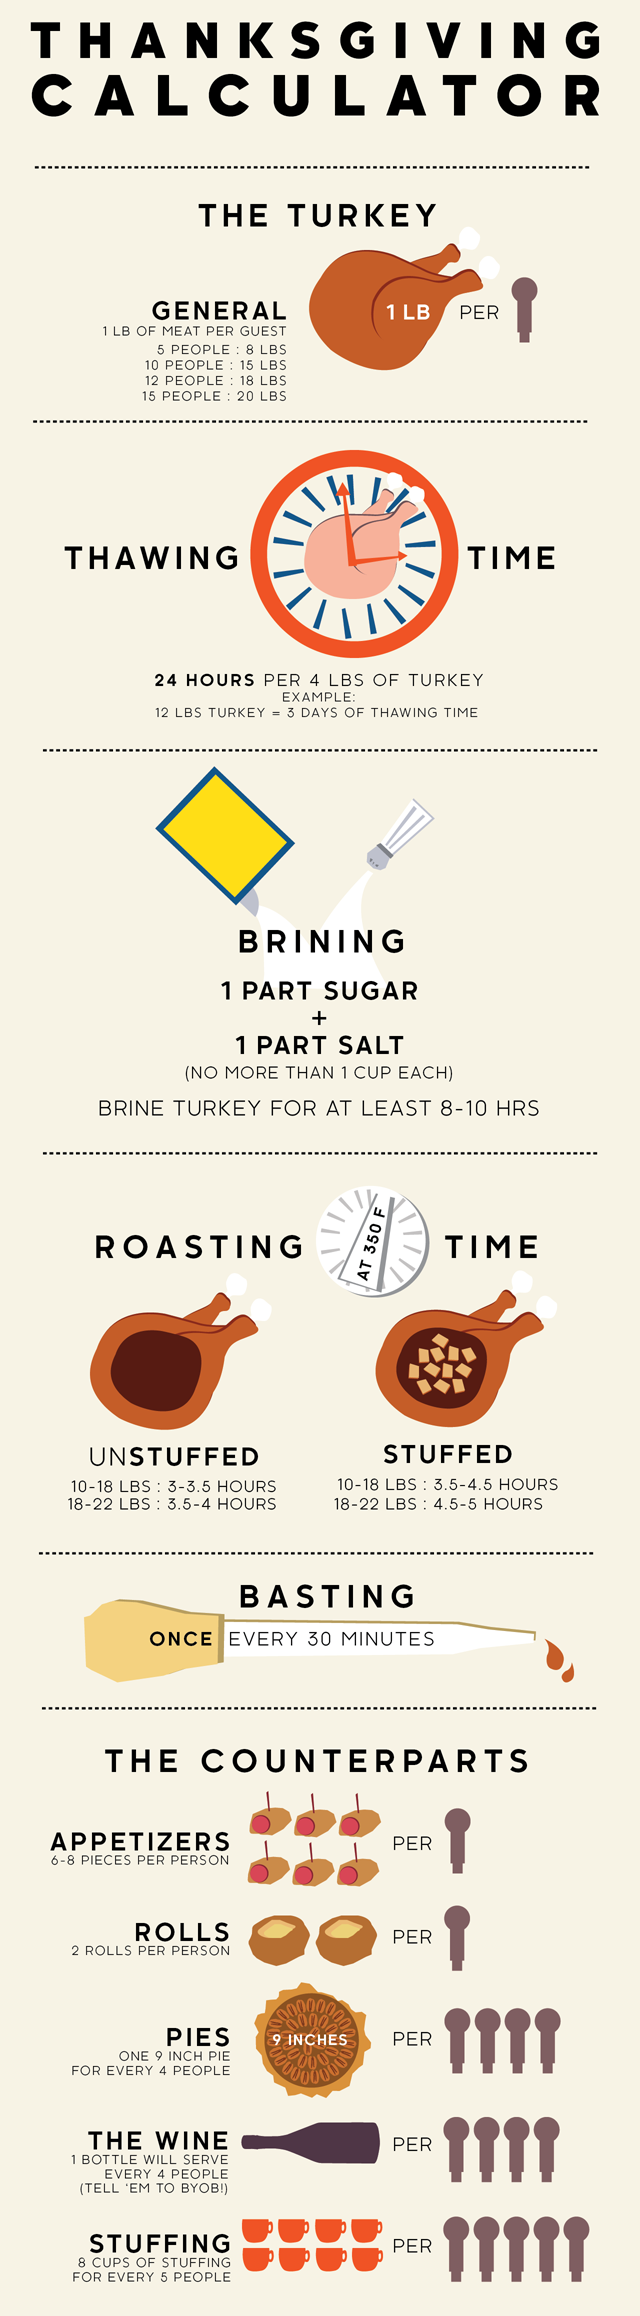 traditional Thanksgiving menu | thanksgiving infographic